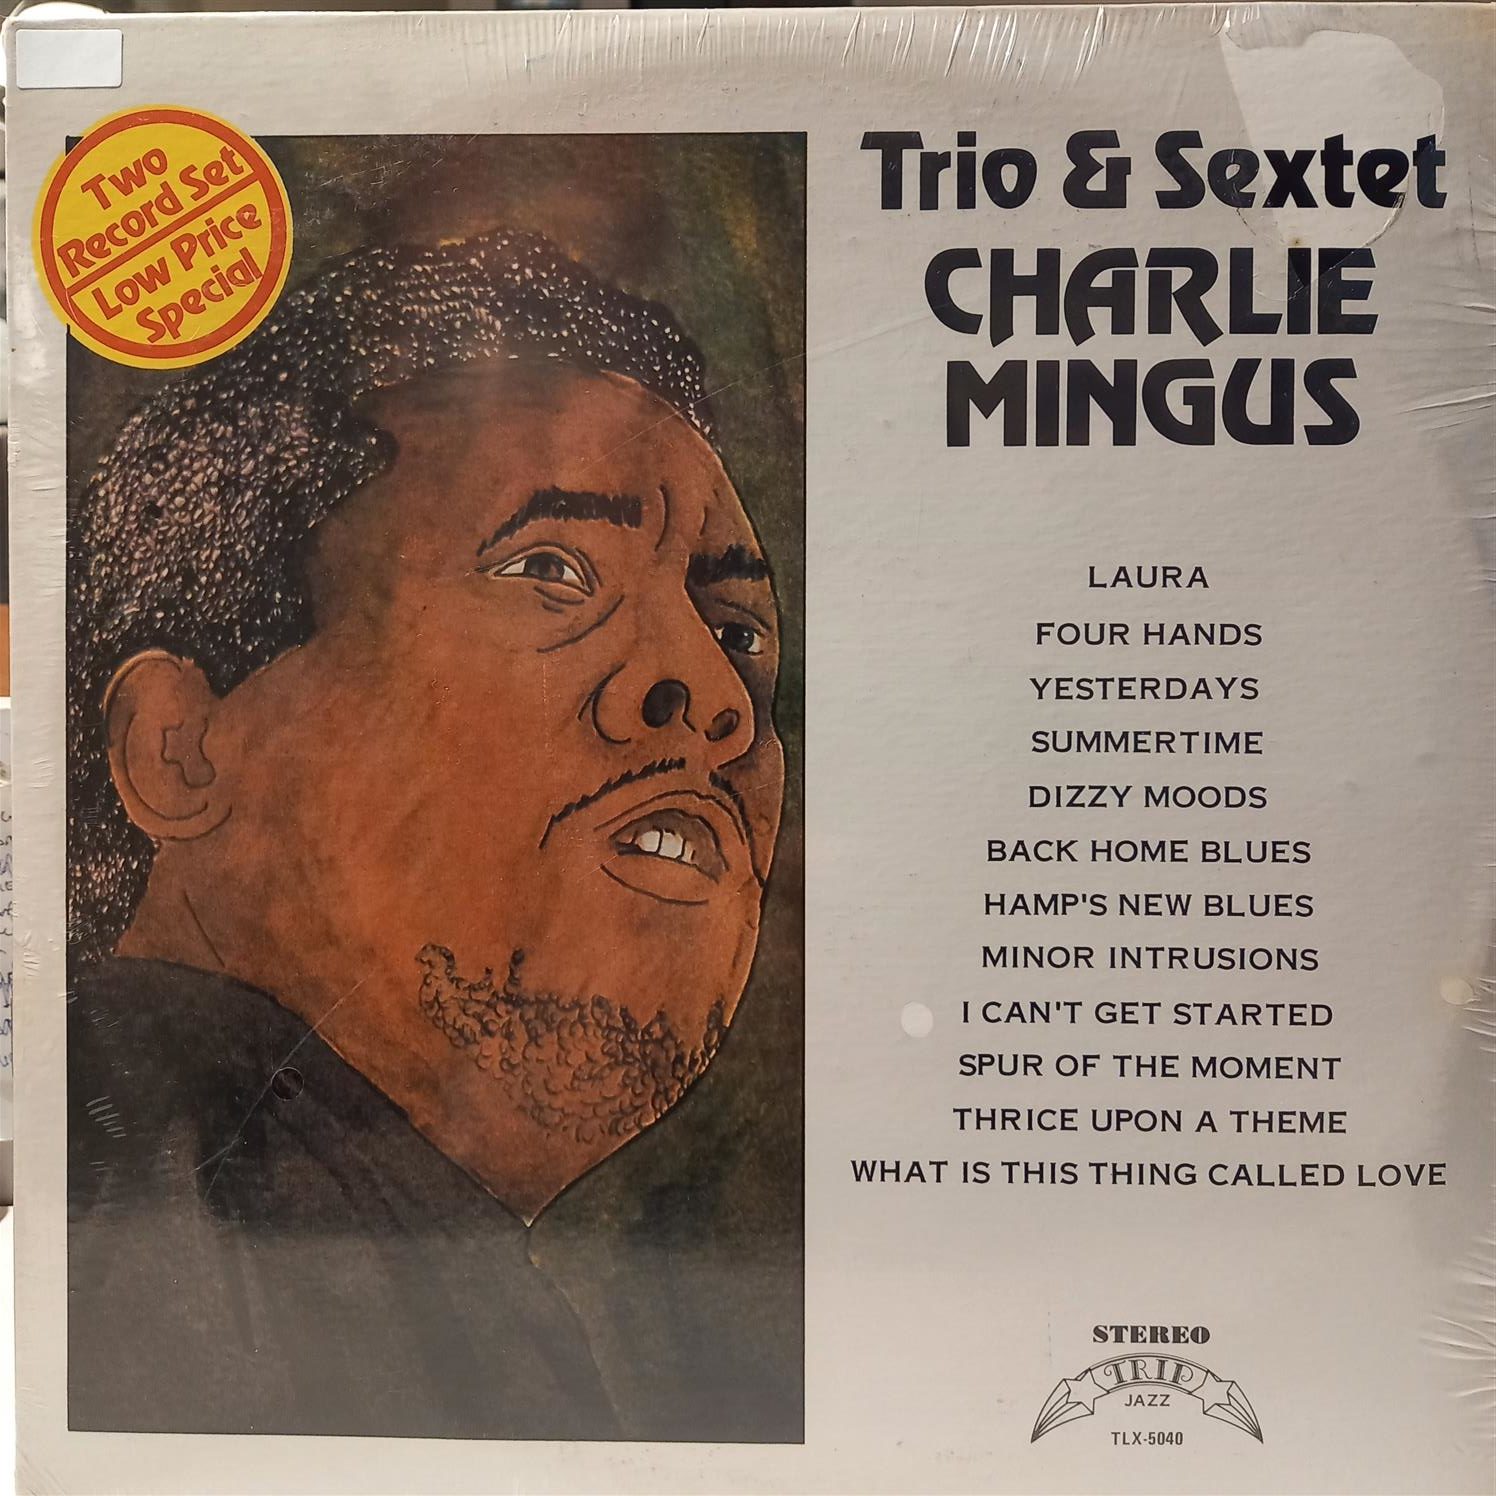 CHARLIE MINGUS – TRIO & SEXTET ON